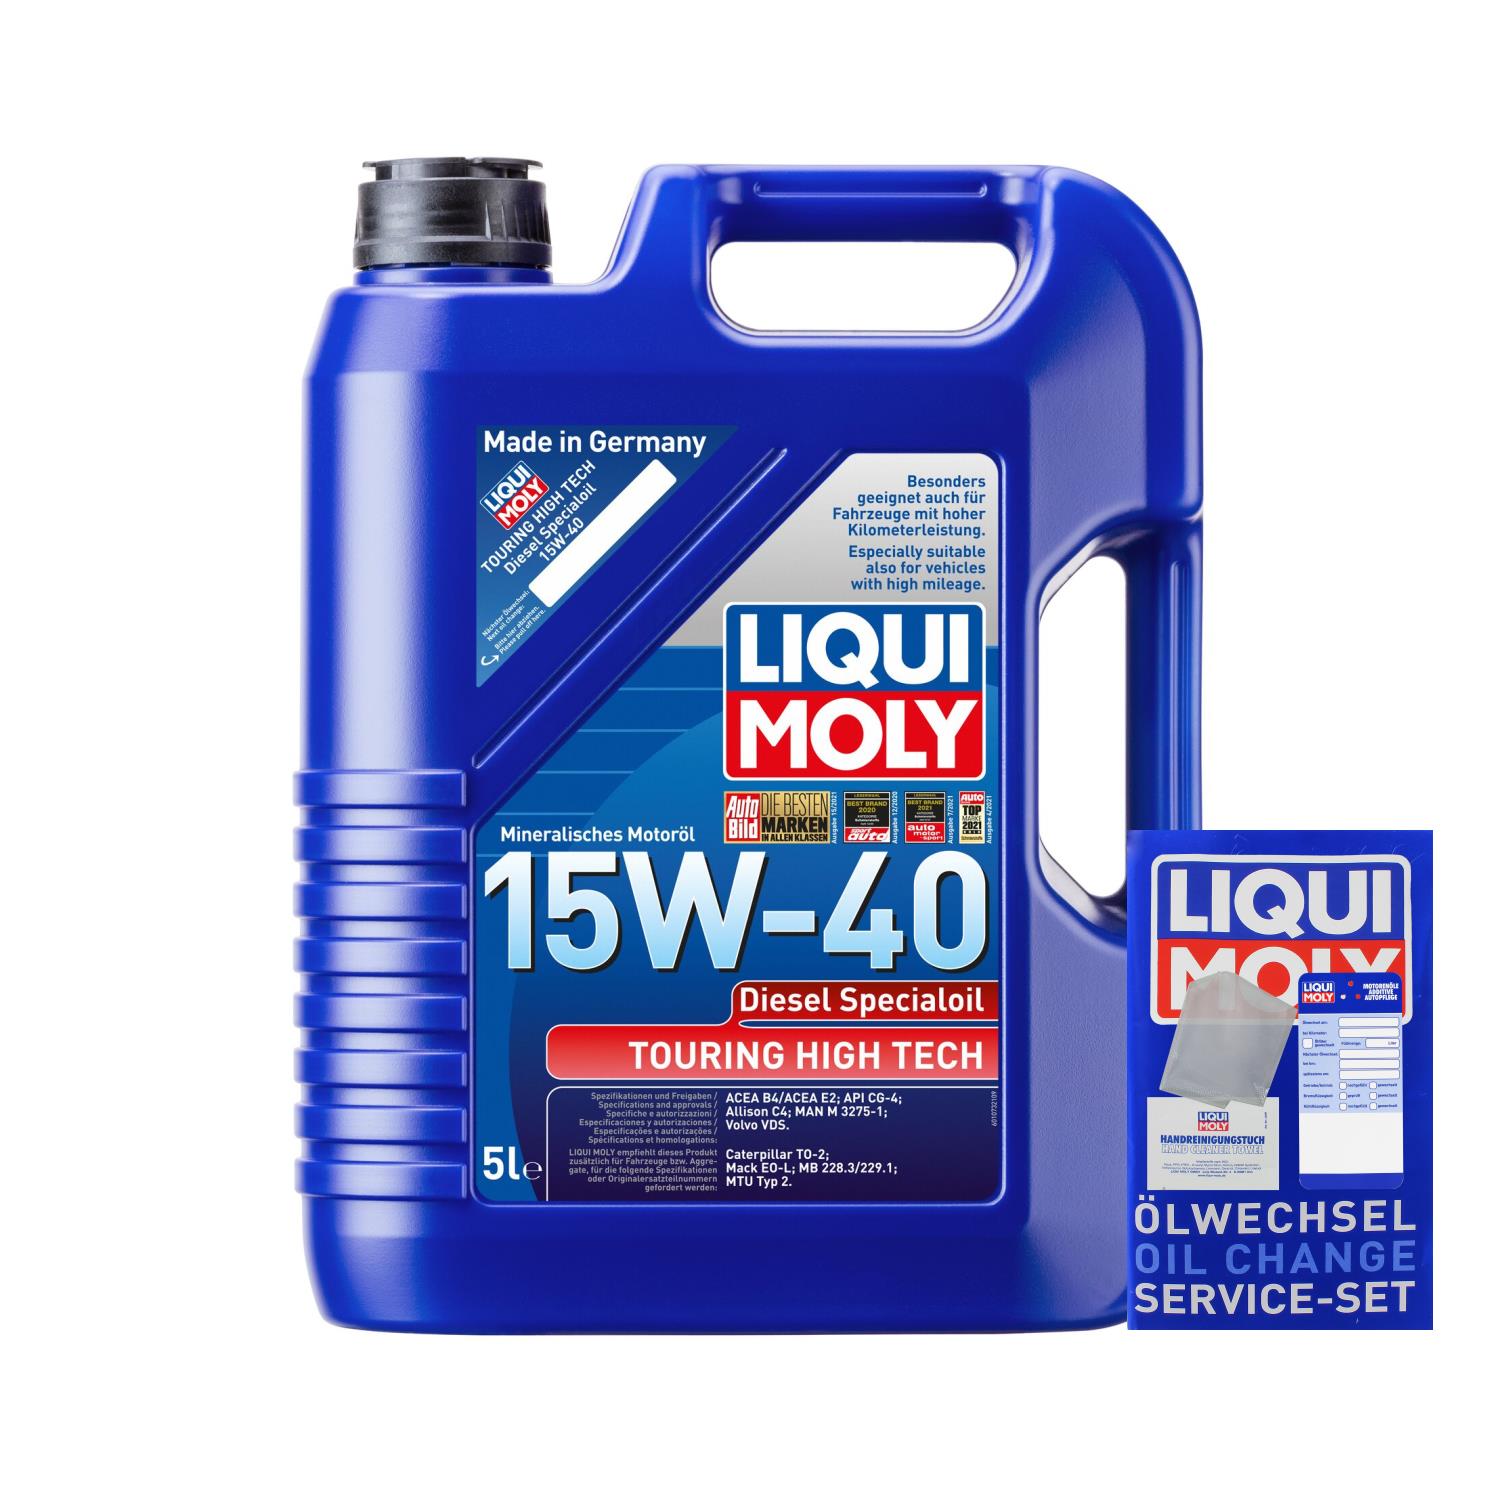 Liqui Moly Touring High Tech Diesel Spezialöl 15W-40 Motoröl Oil 5L